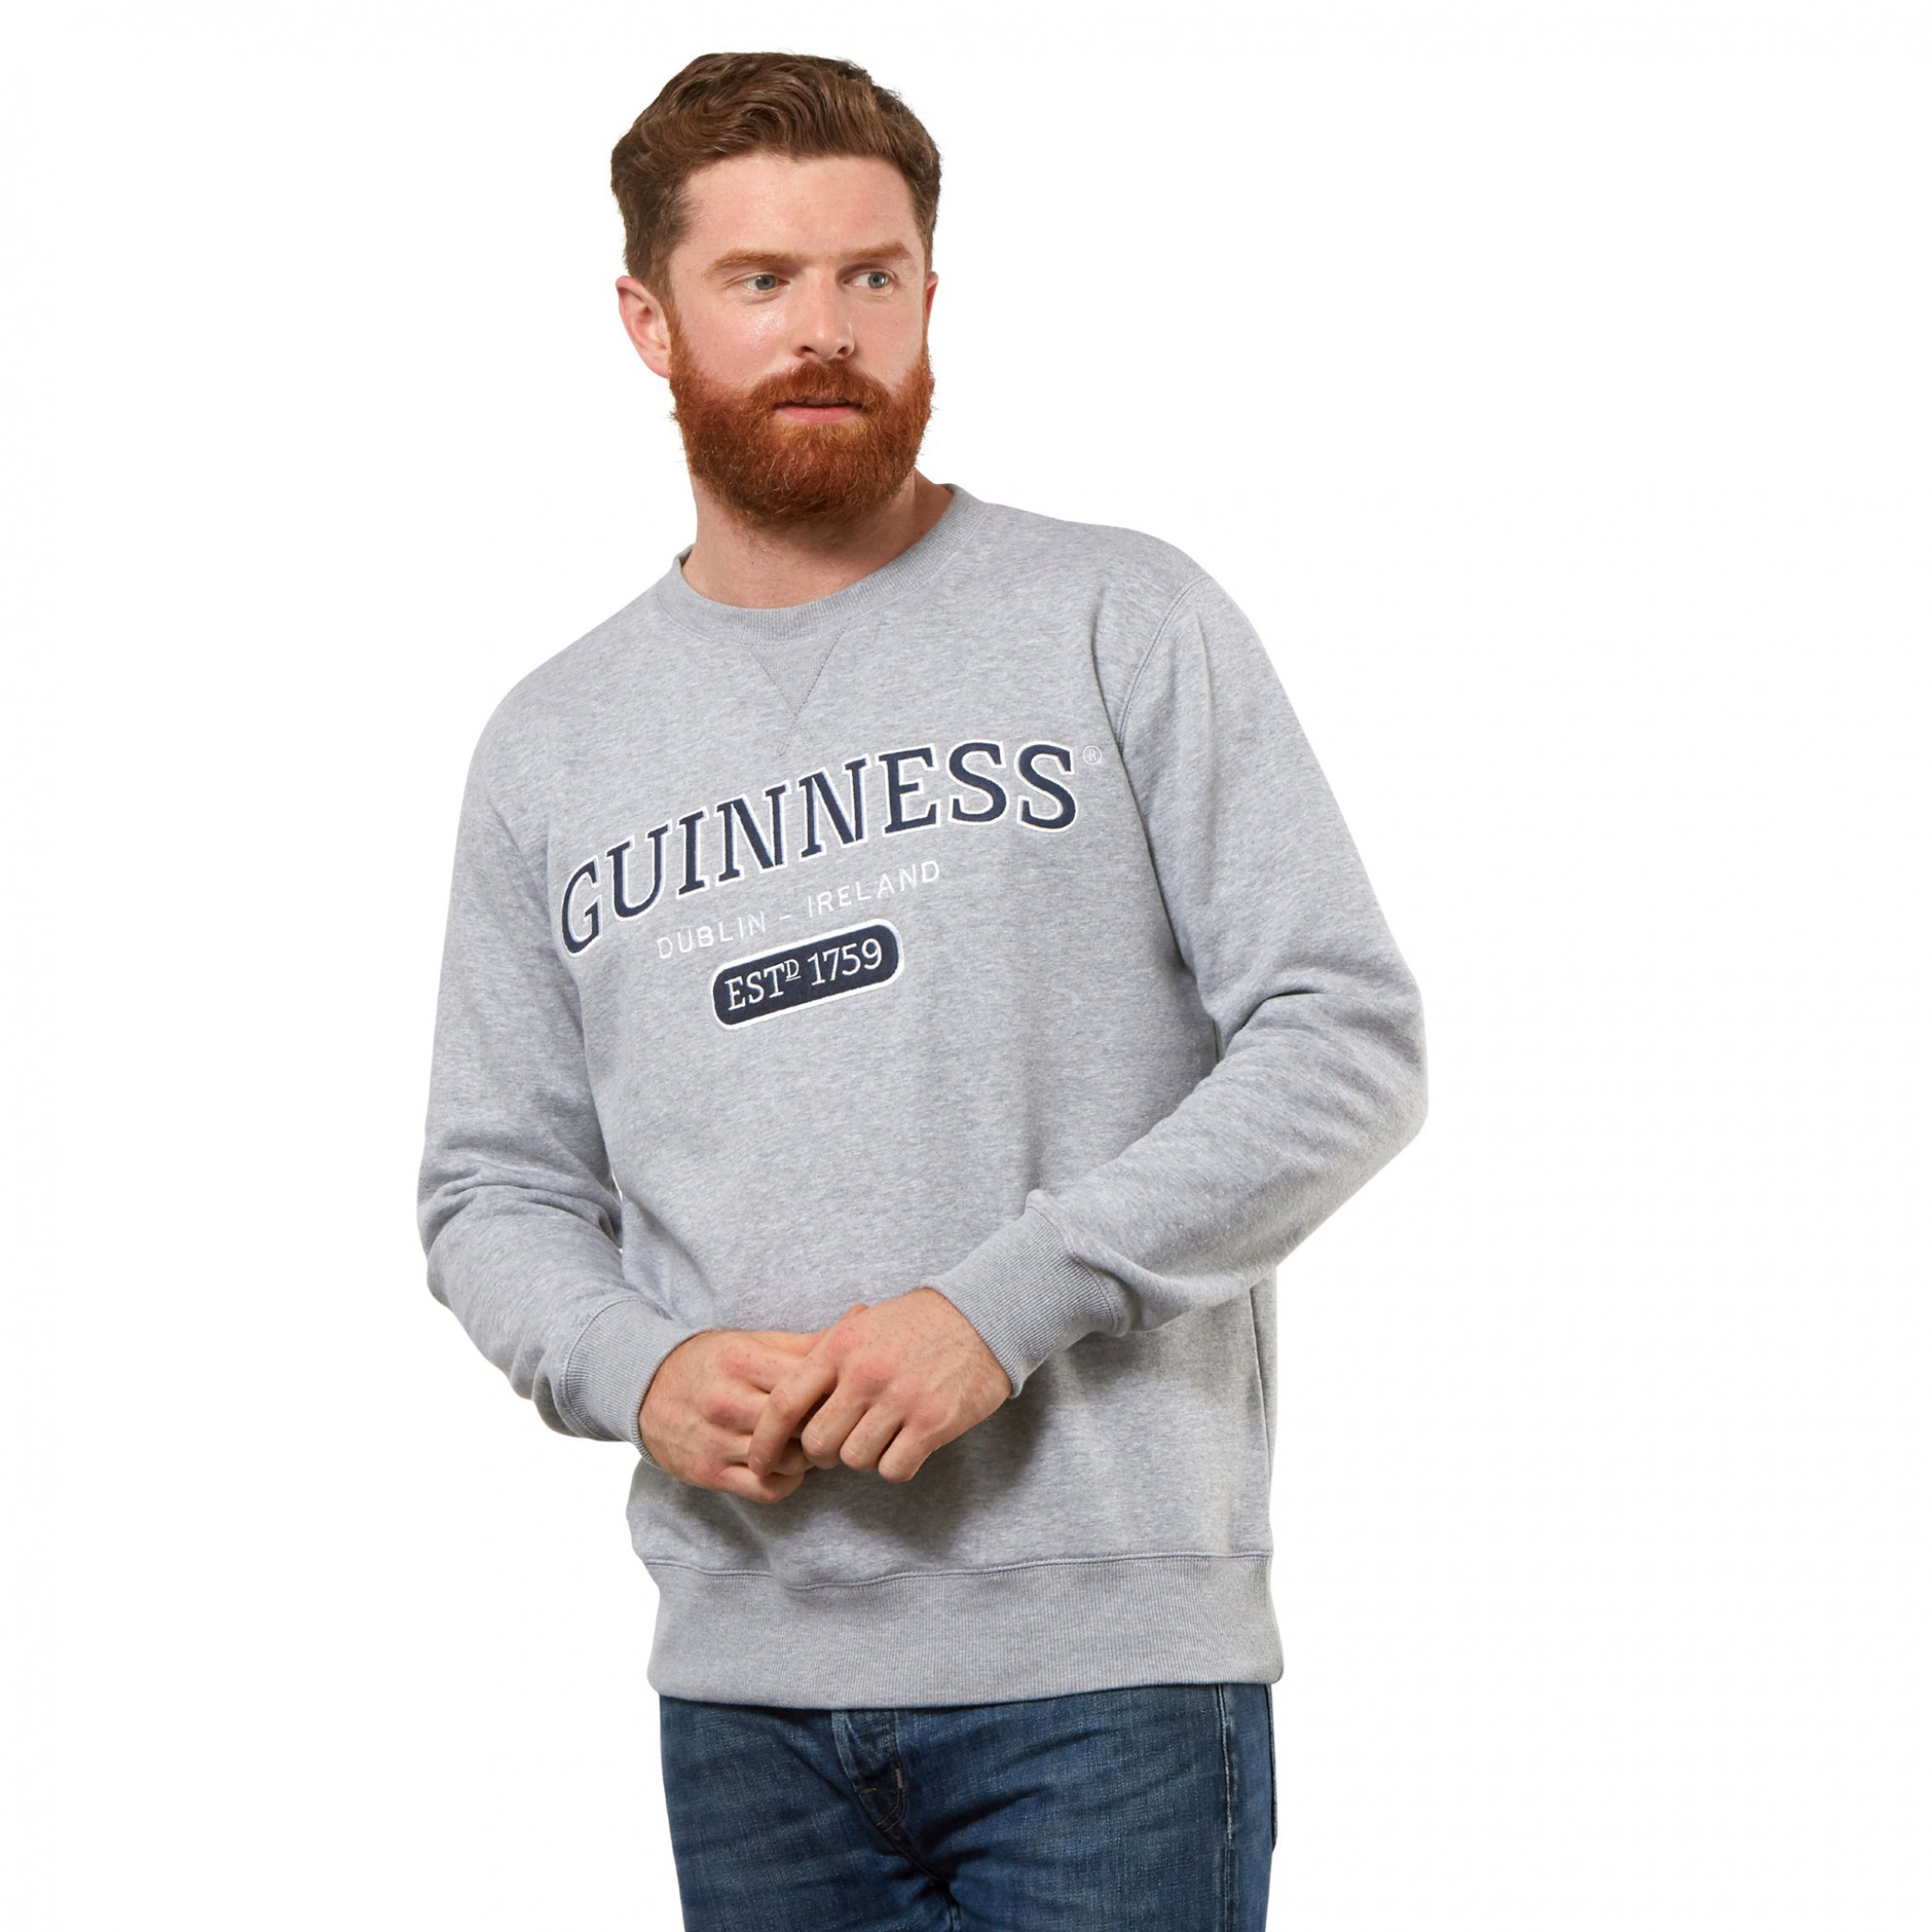 Guinness Dublin Ireland 1759 Long Sleeve Sweatshirt